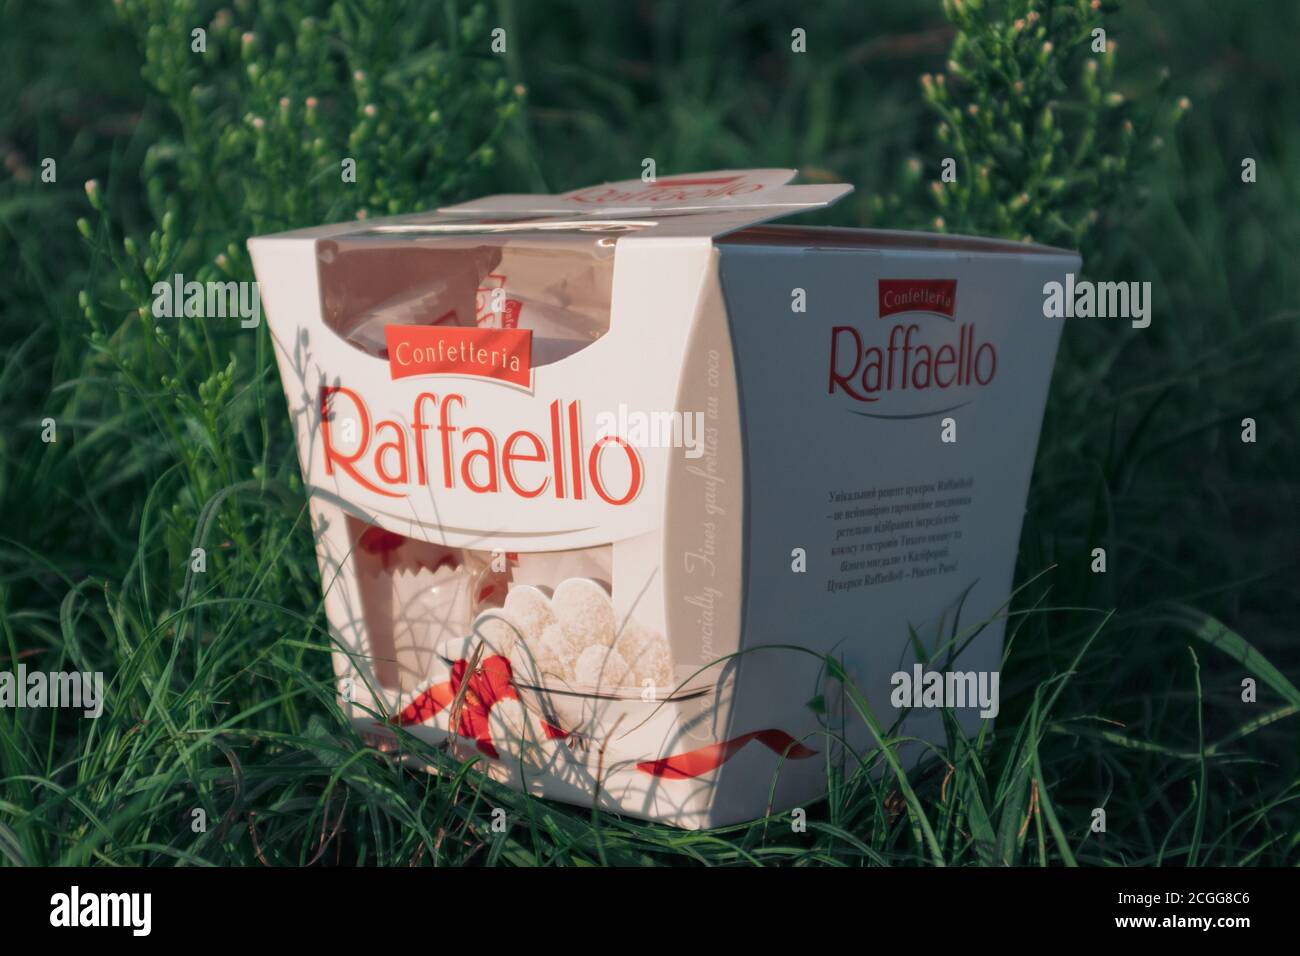 Raffaello ferrero Cut Out Stock Images & Pictures - Alamy